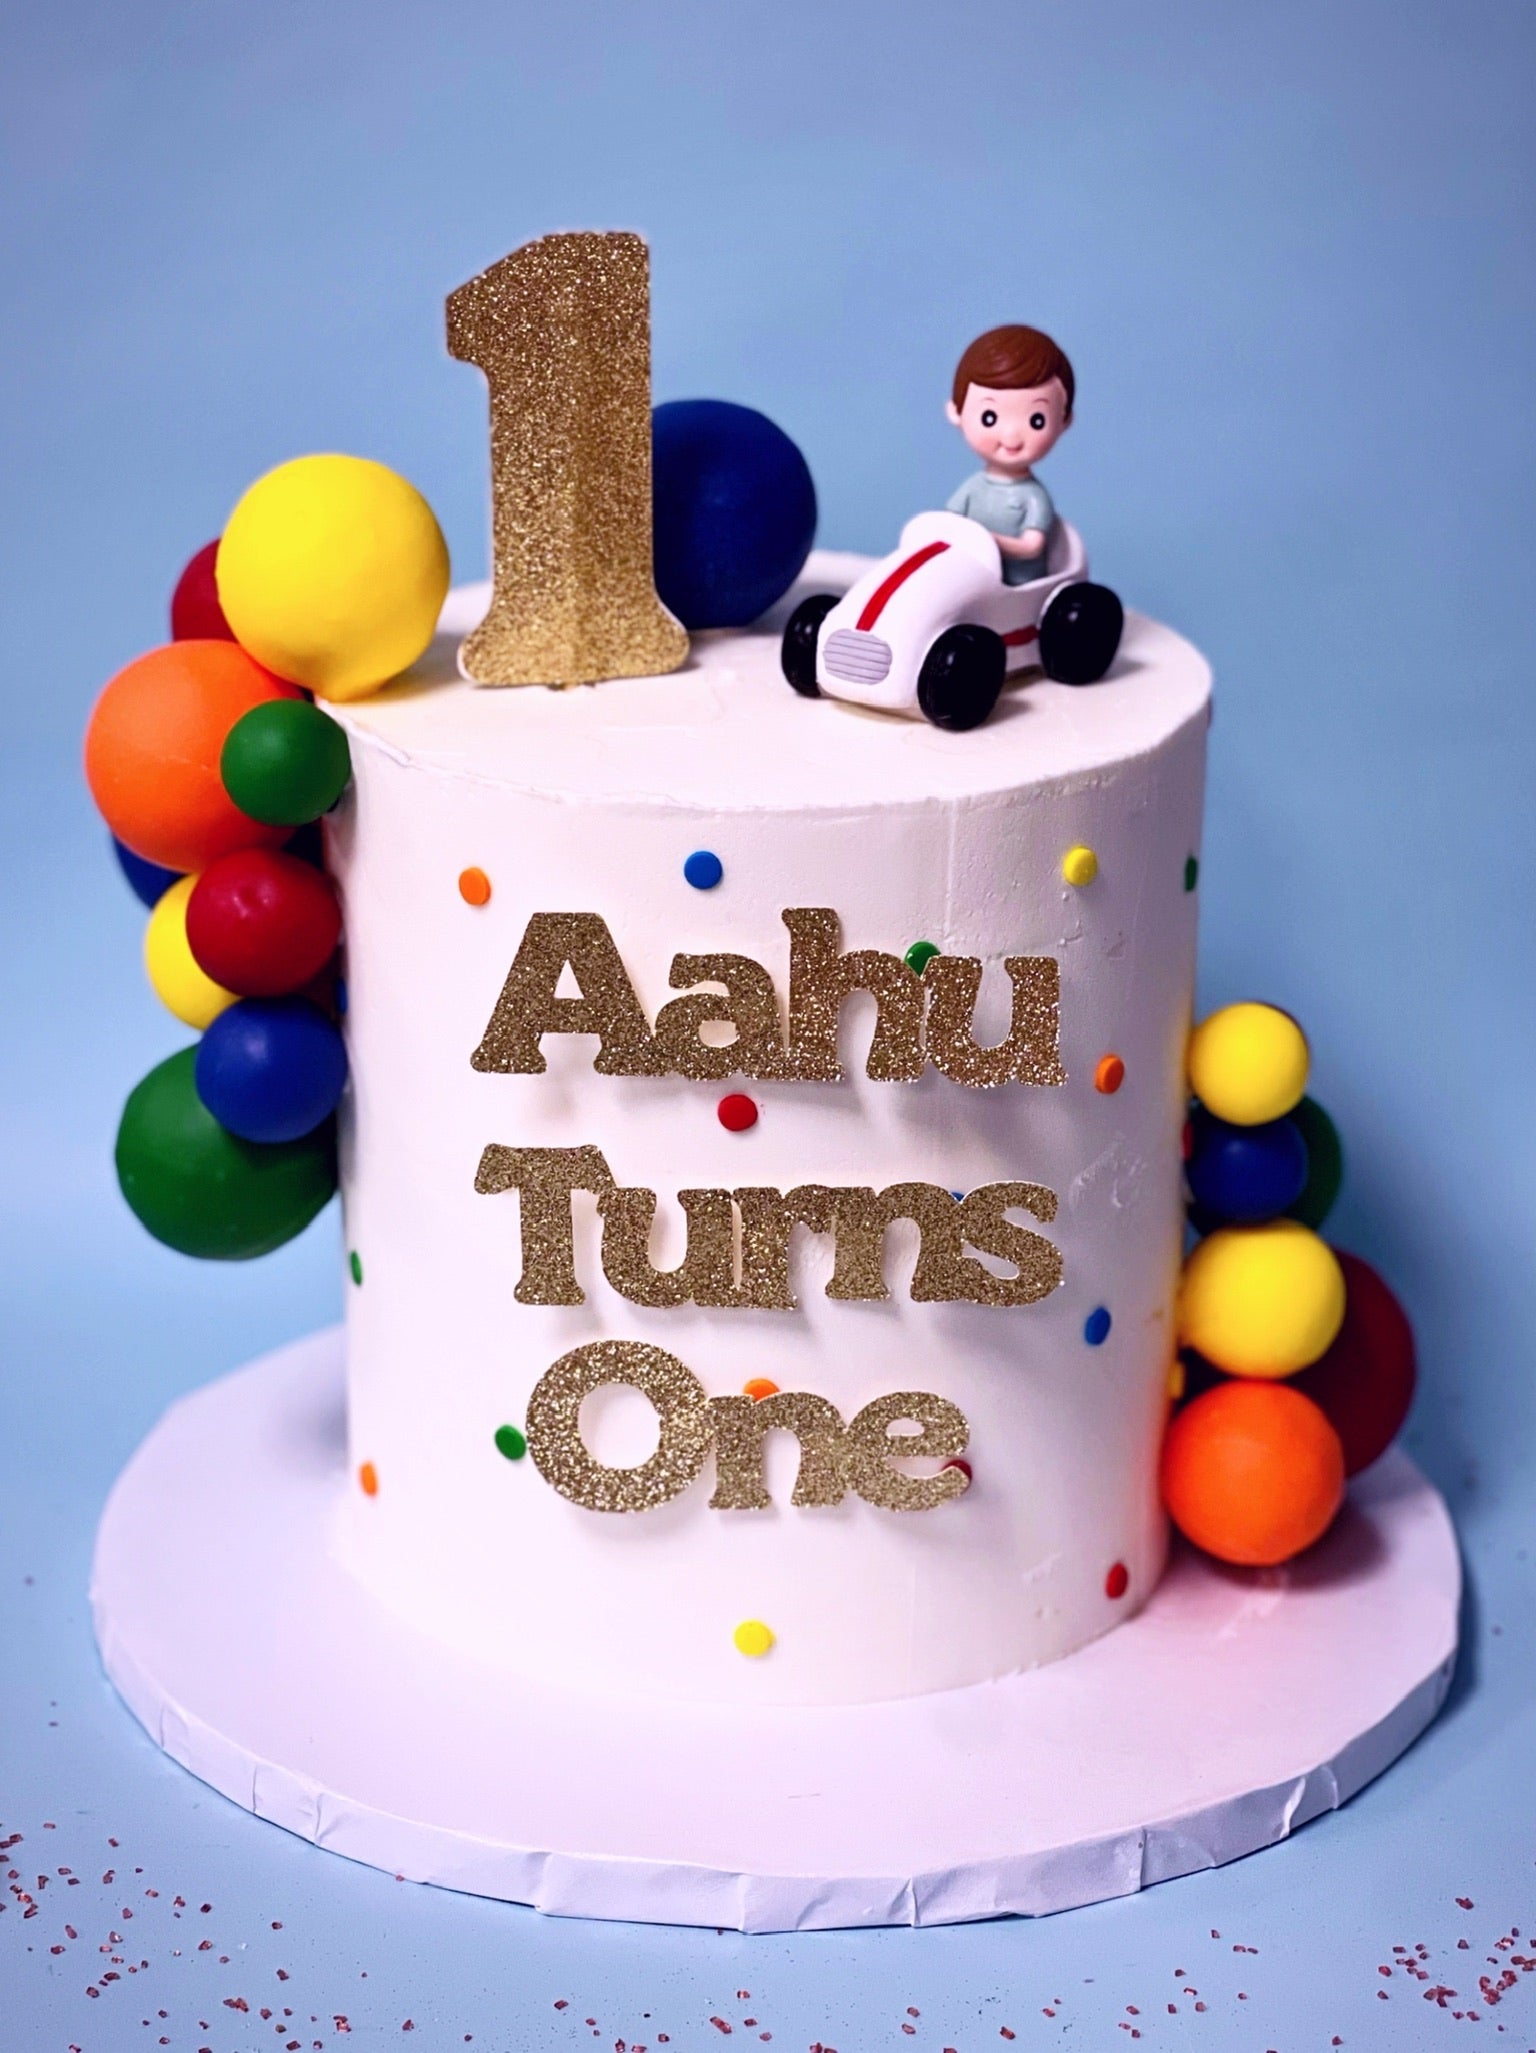 15 The Cutest First Birthday Cake Ideas, 1st birthday cakes